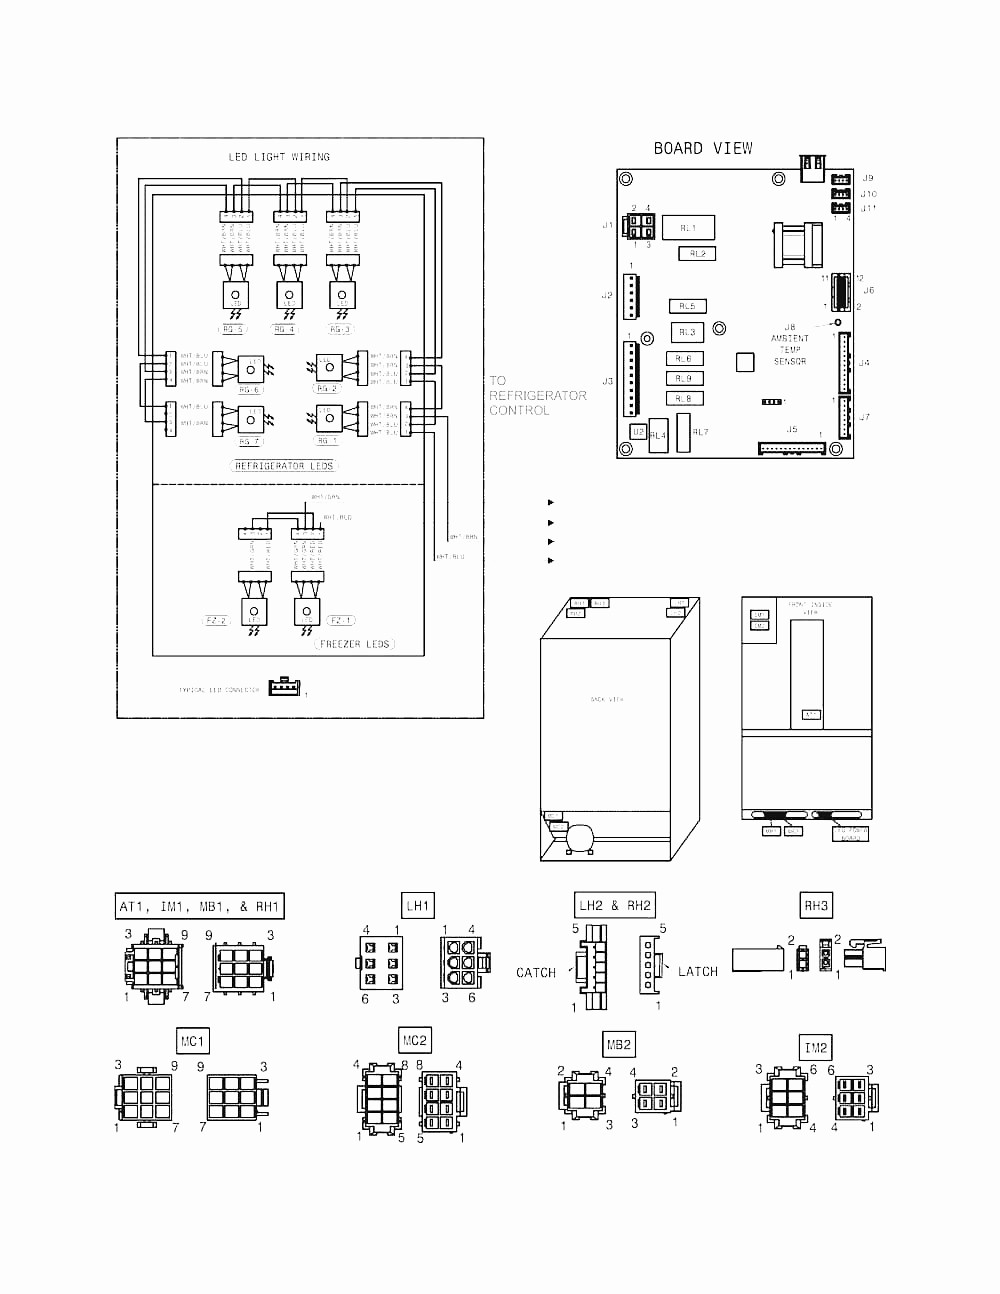 Wiring Diagram Double Door Refrigerator Wiring Diagram Best Kenmore Refrigerator 106 Wiring Diagram Wire Center